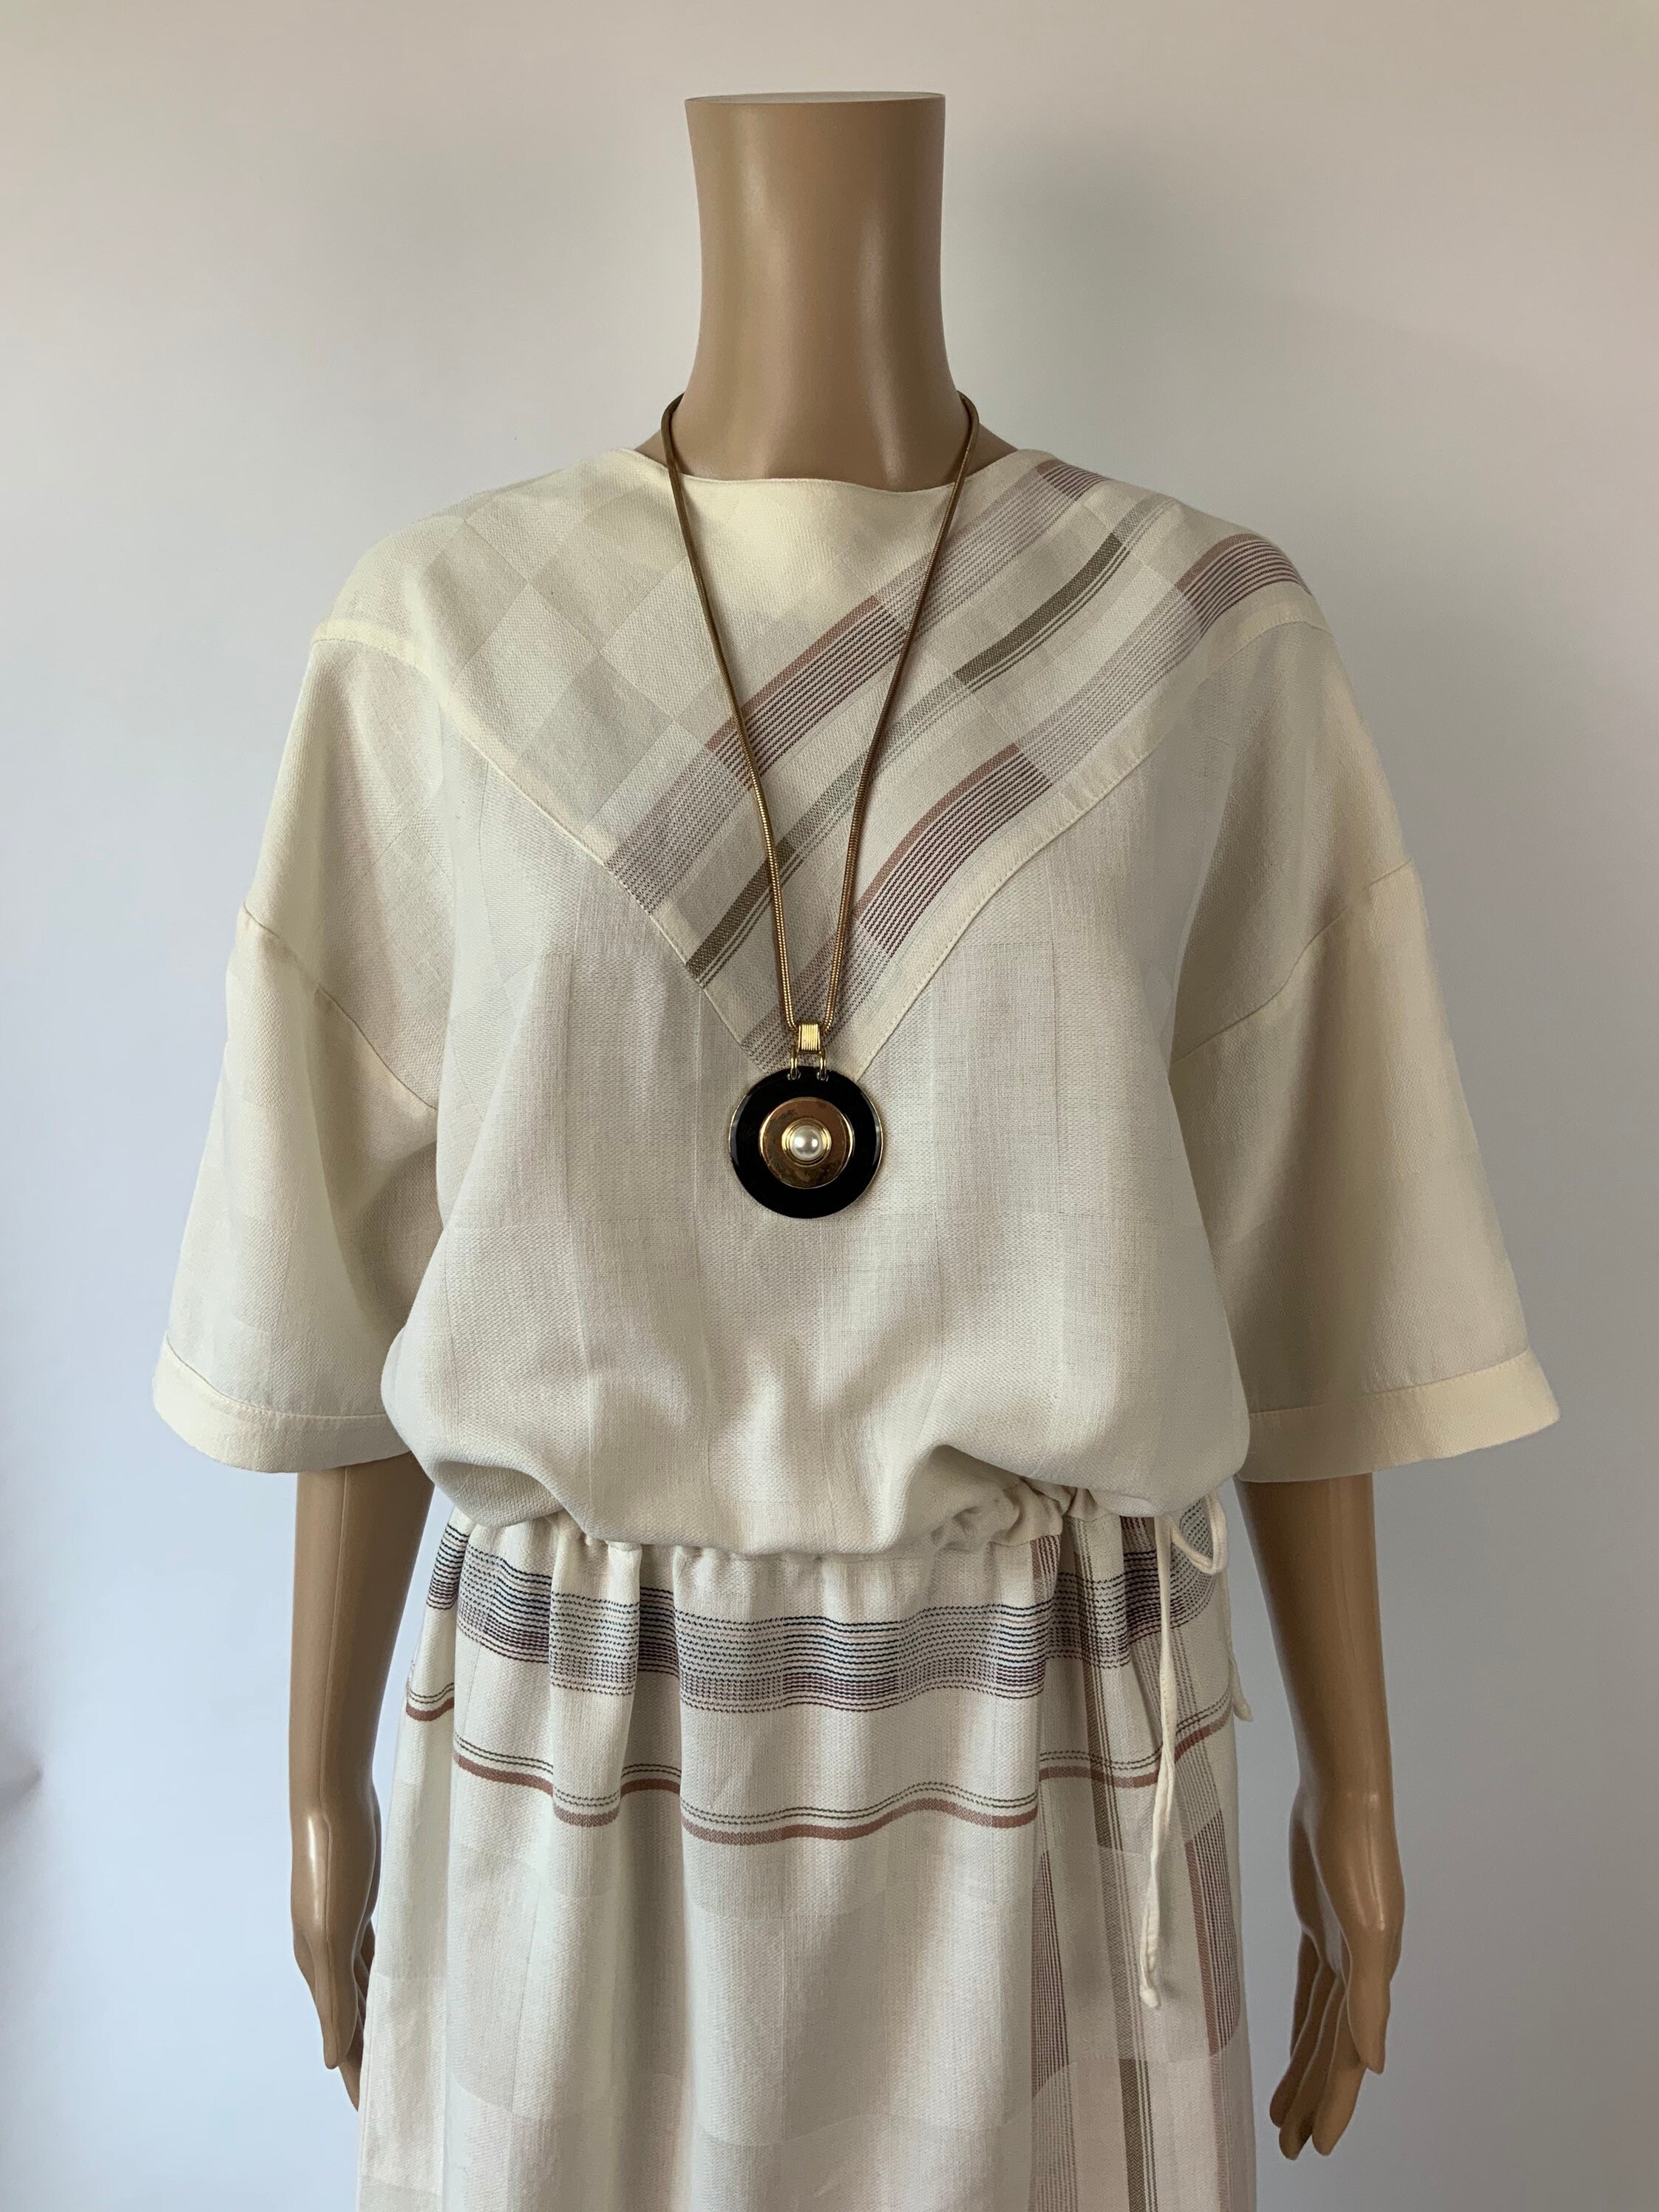 AROLA 1970's Vintage White Cotton Dress / Minimalist Summer Dress